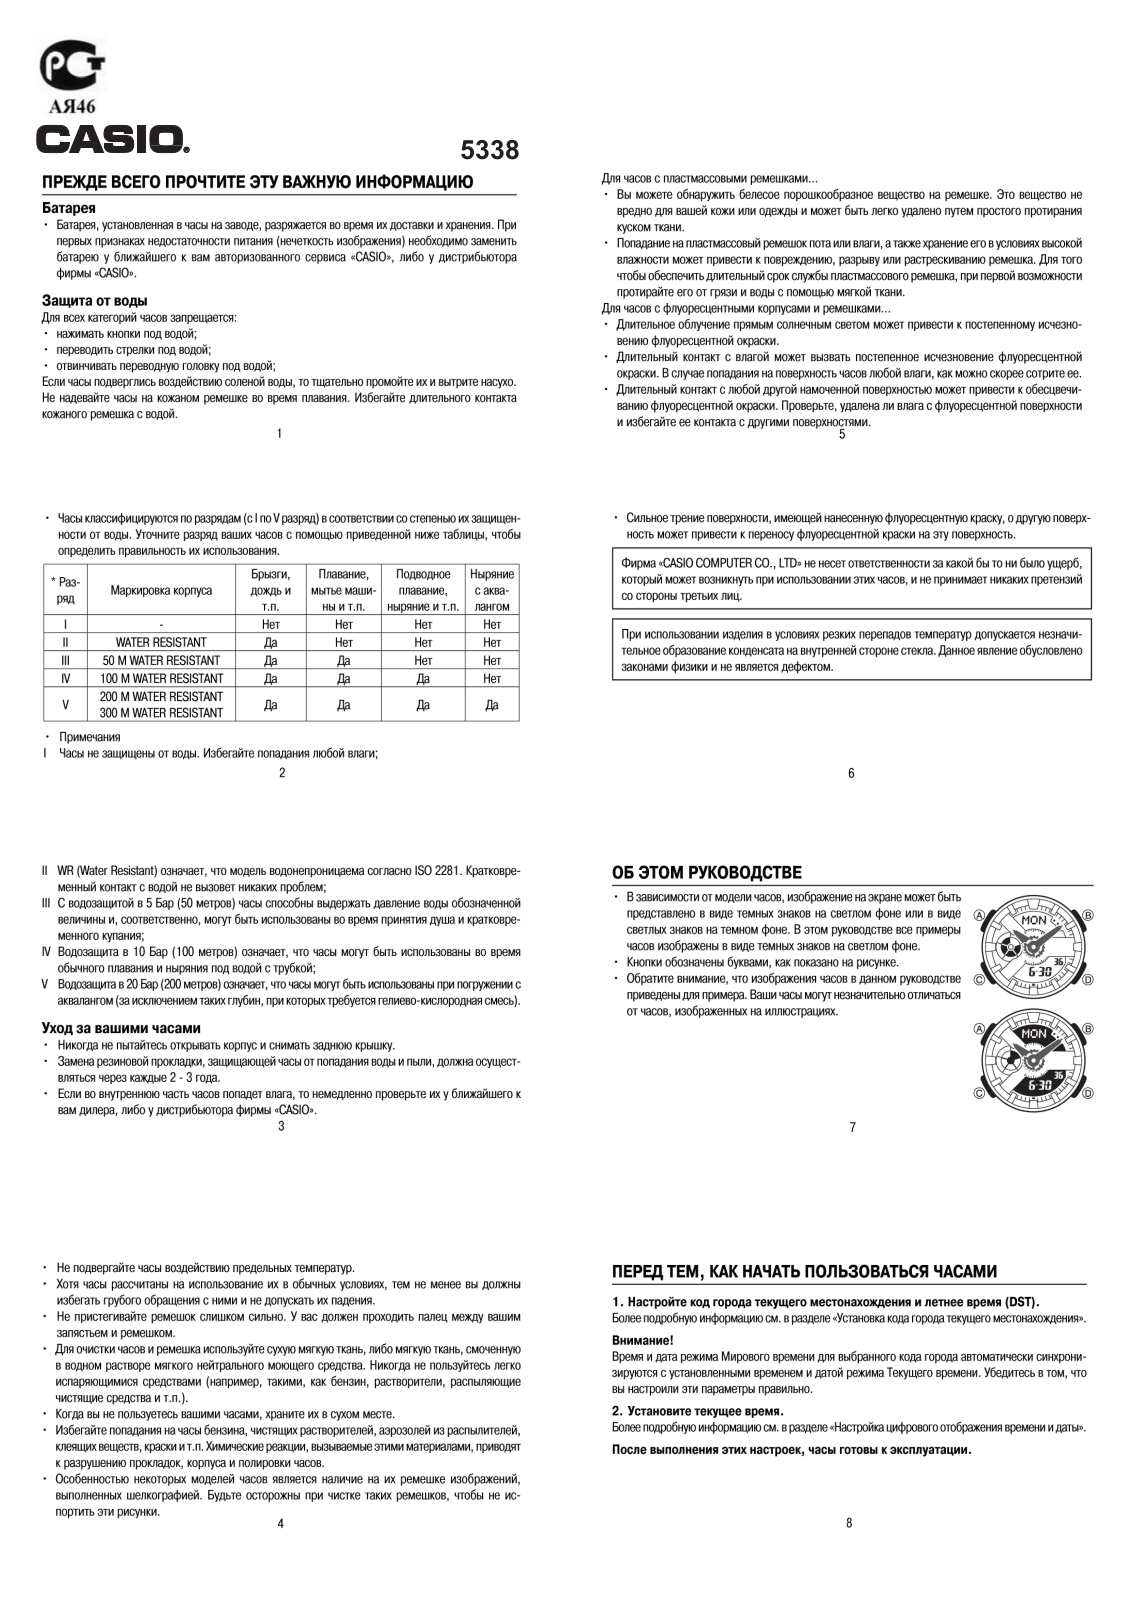 Casio BA-110RG-7AER User Manual